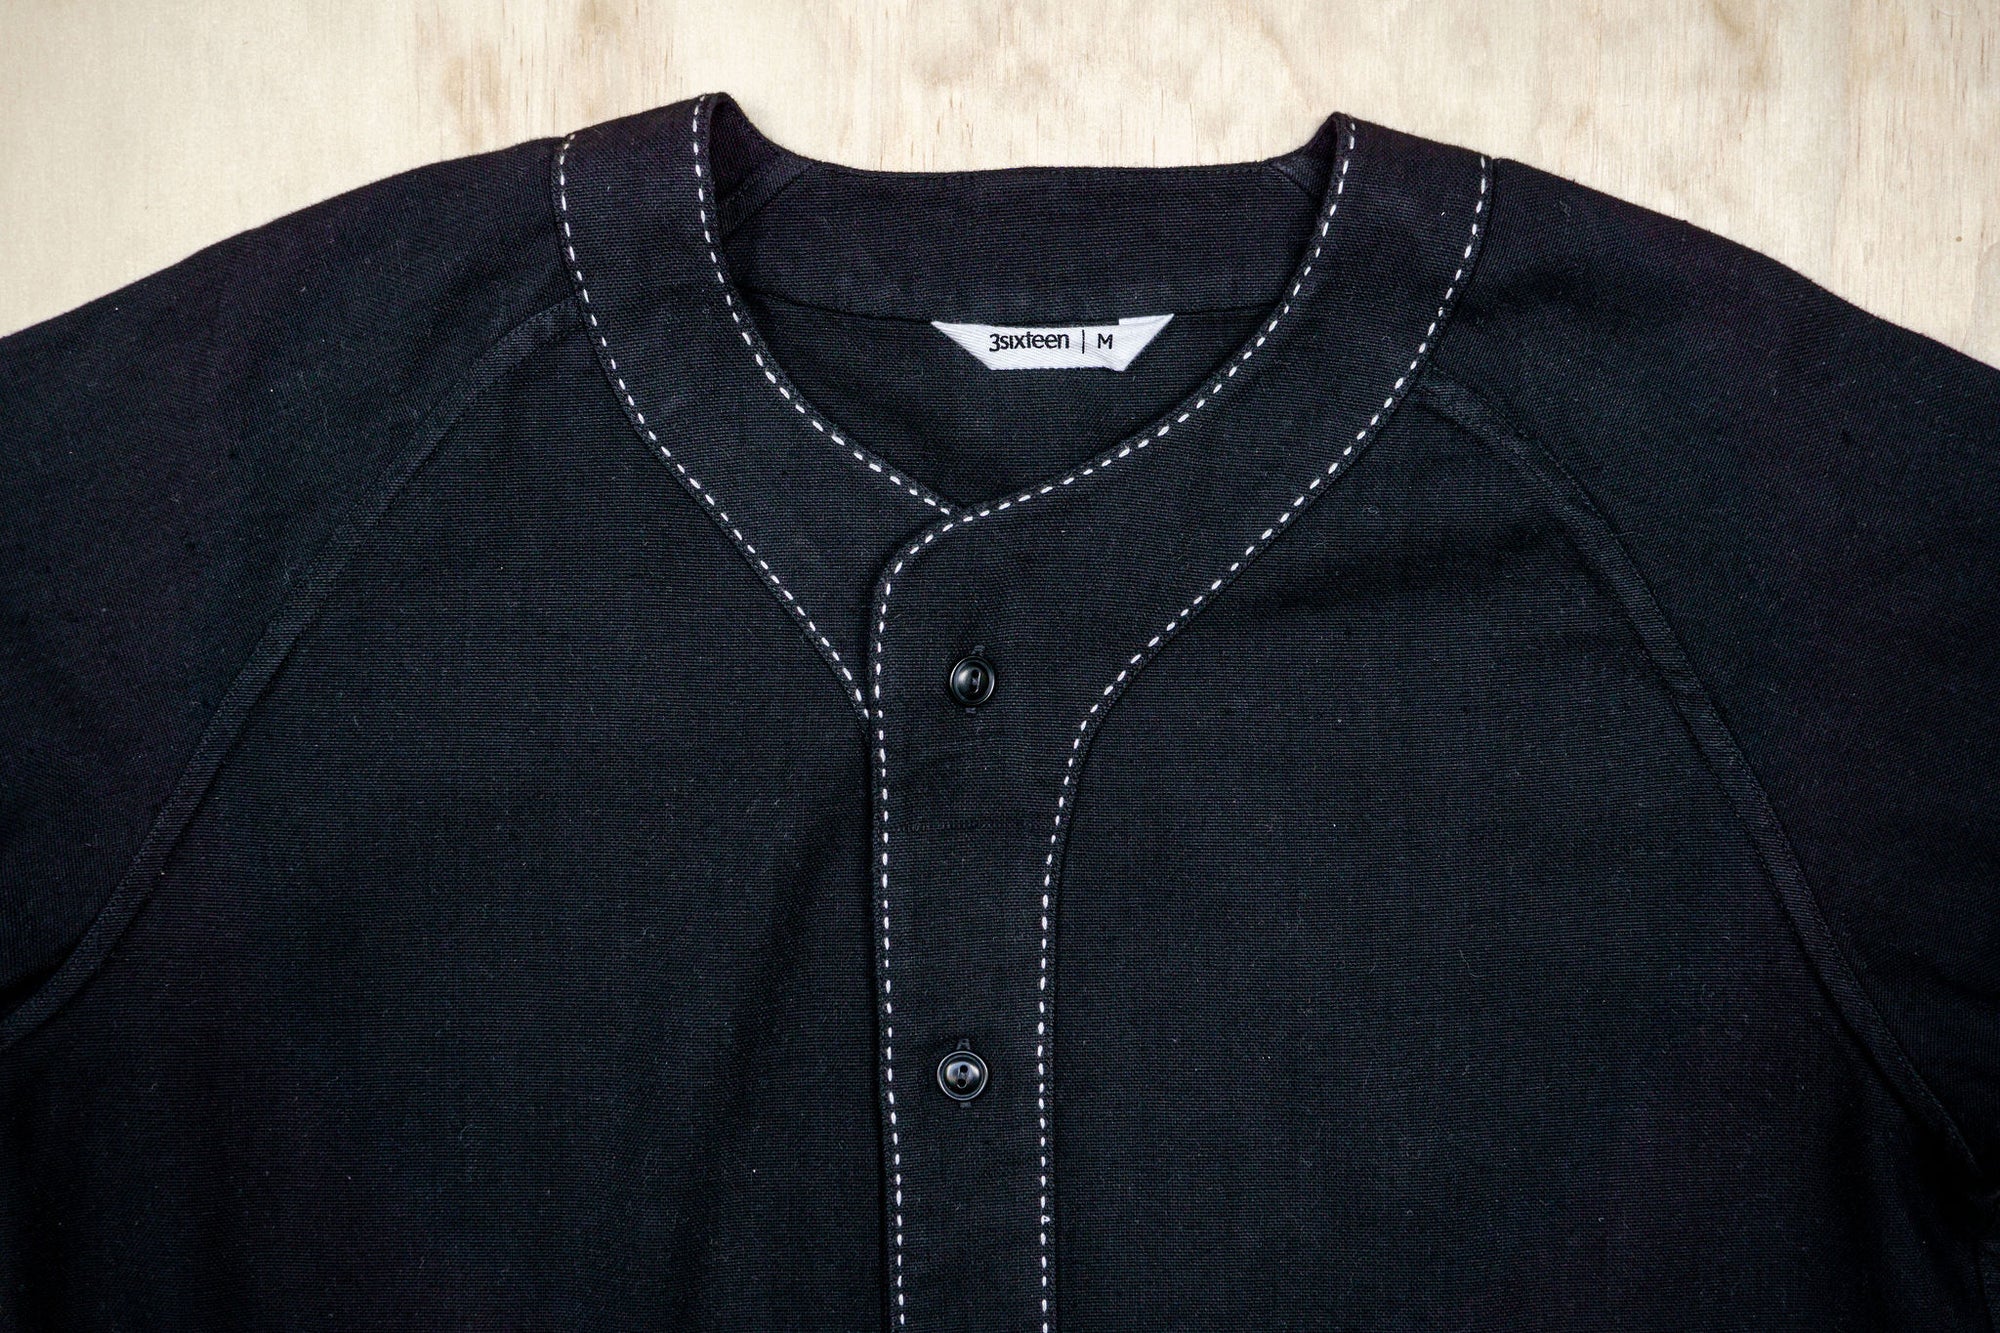 3sixteen Baseball Shirt - Black Khadi Handstitch